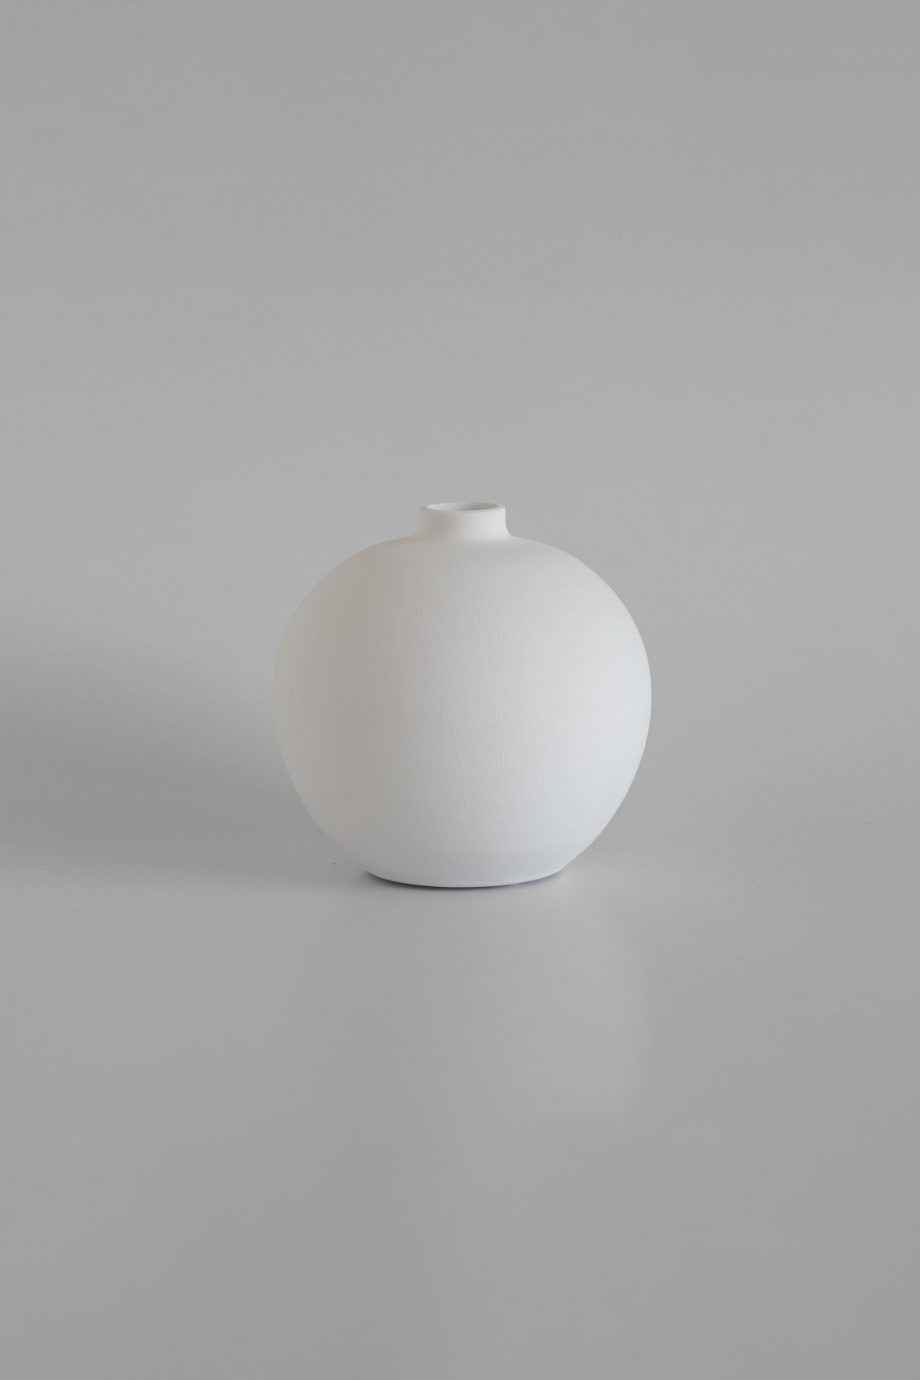 white round vase from the Portuguese handicraft brand o cactuu.